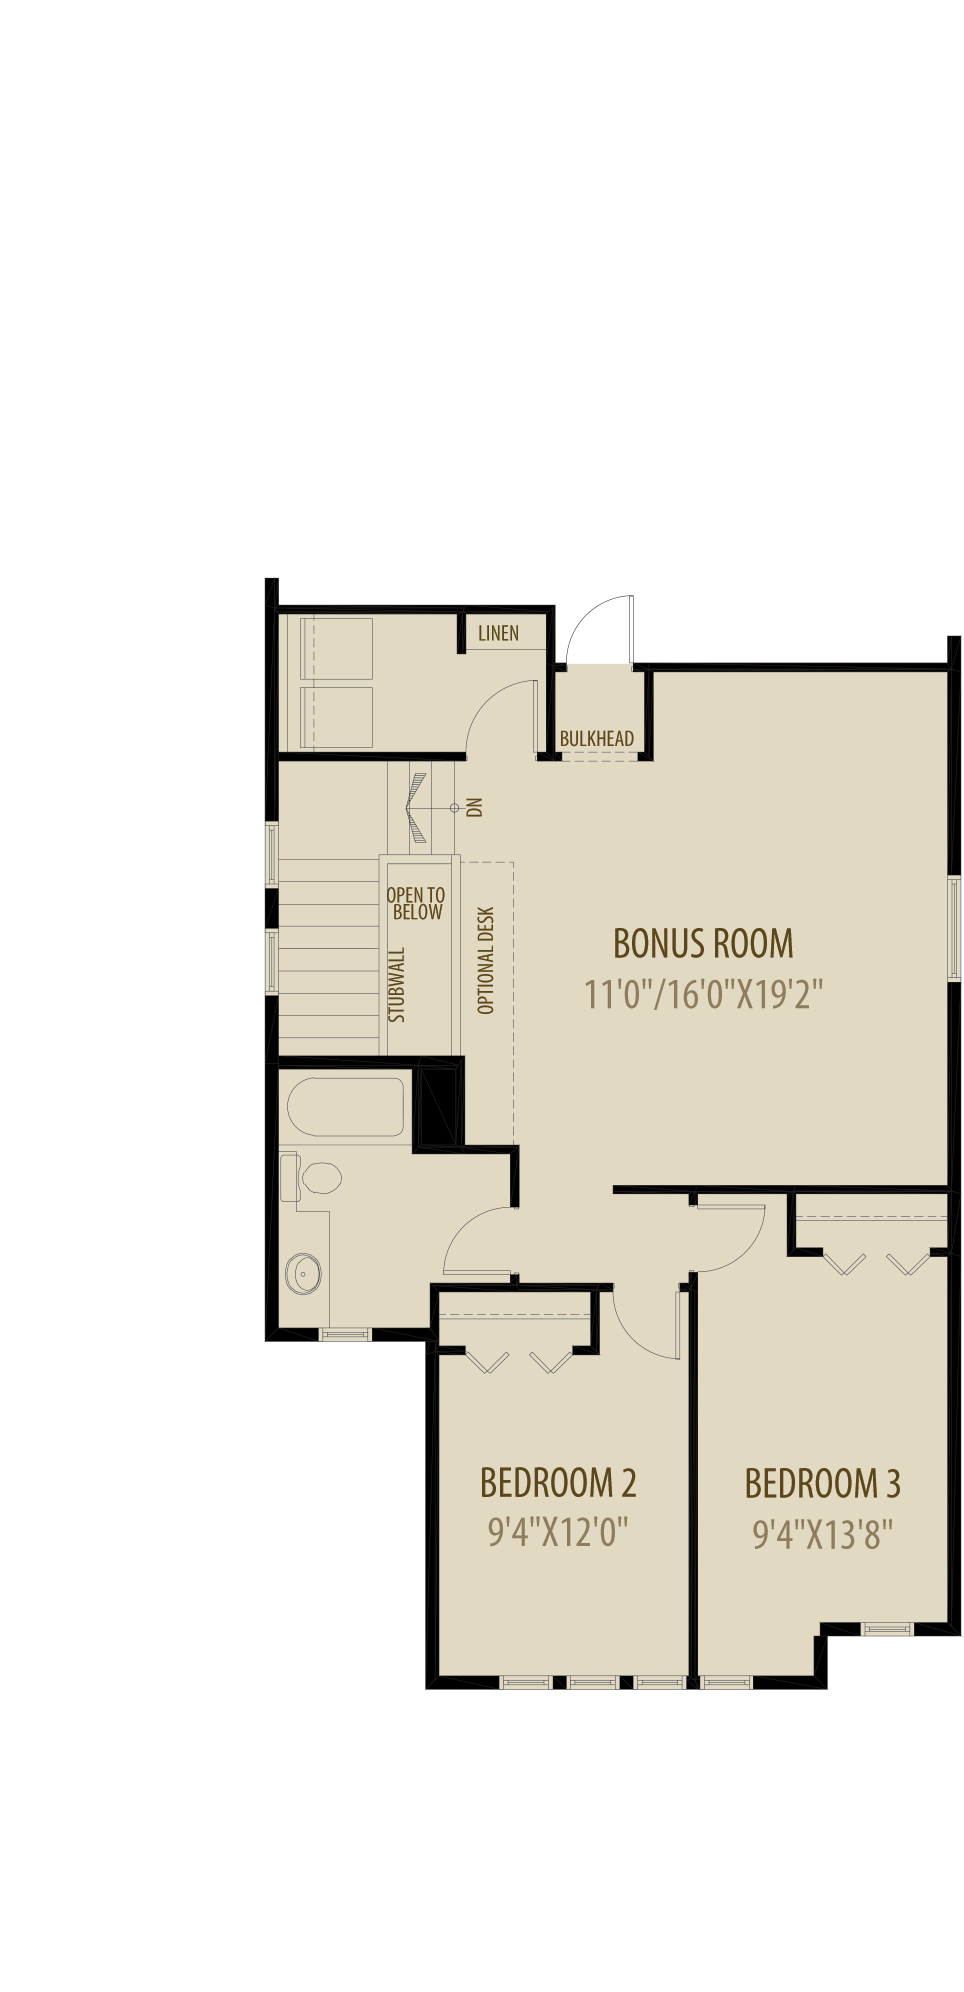 Option 6 Central Bonus Room